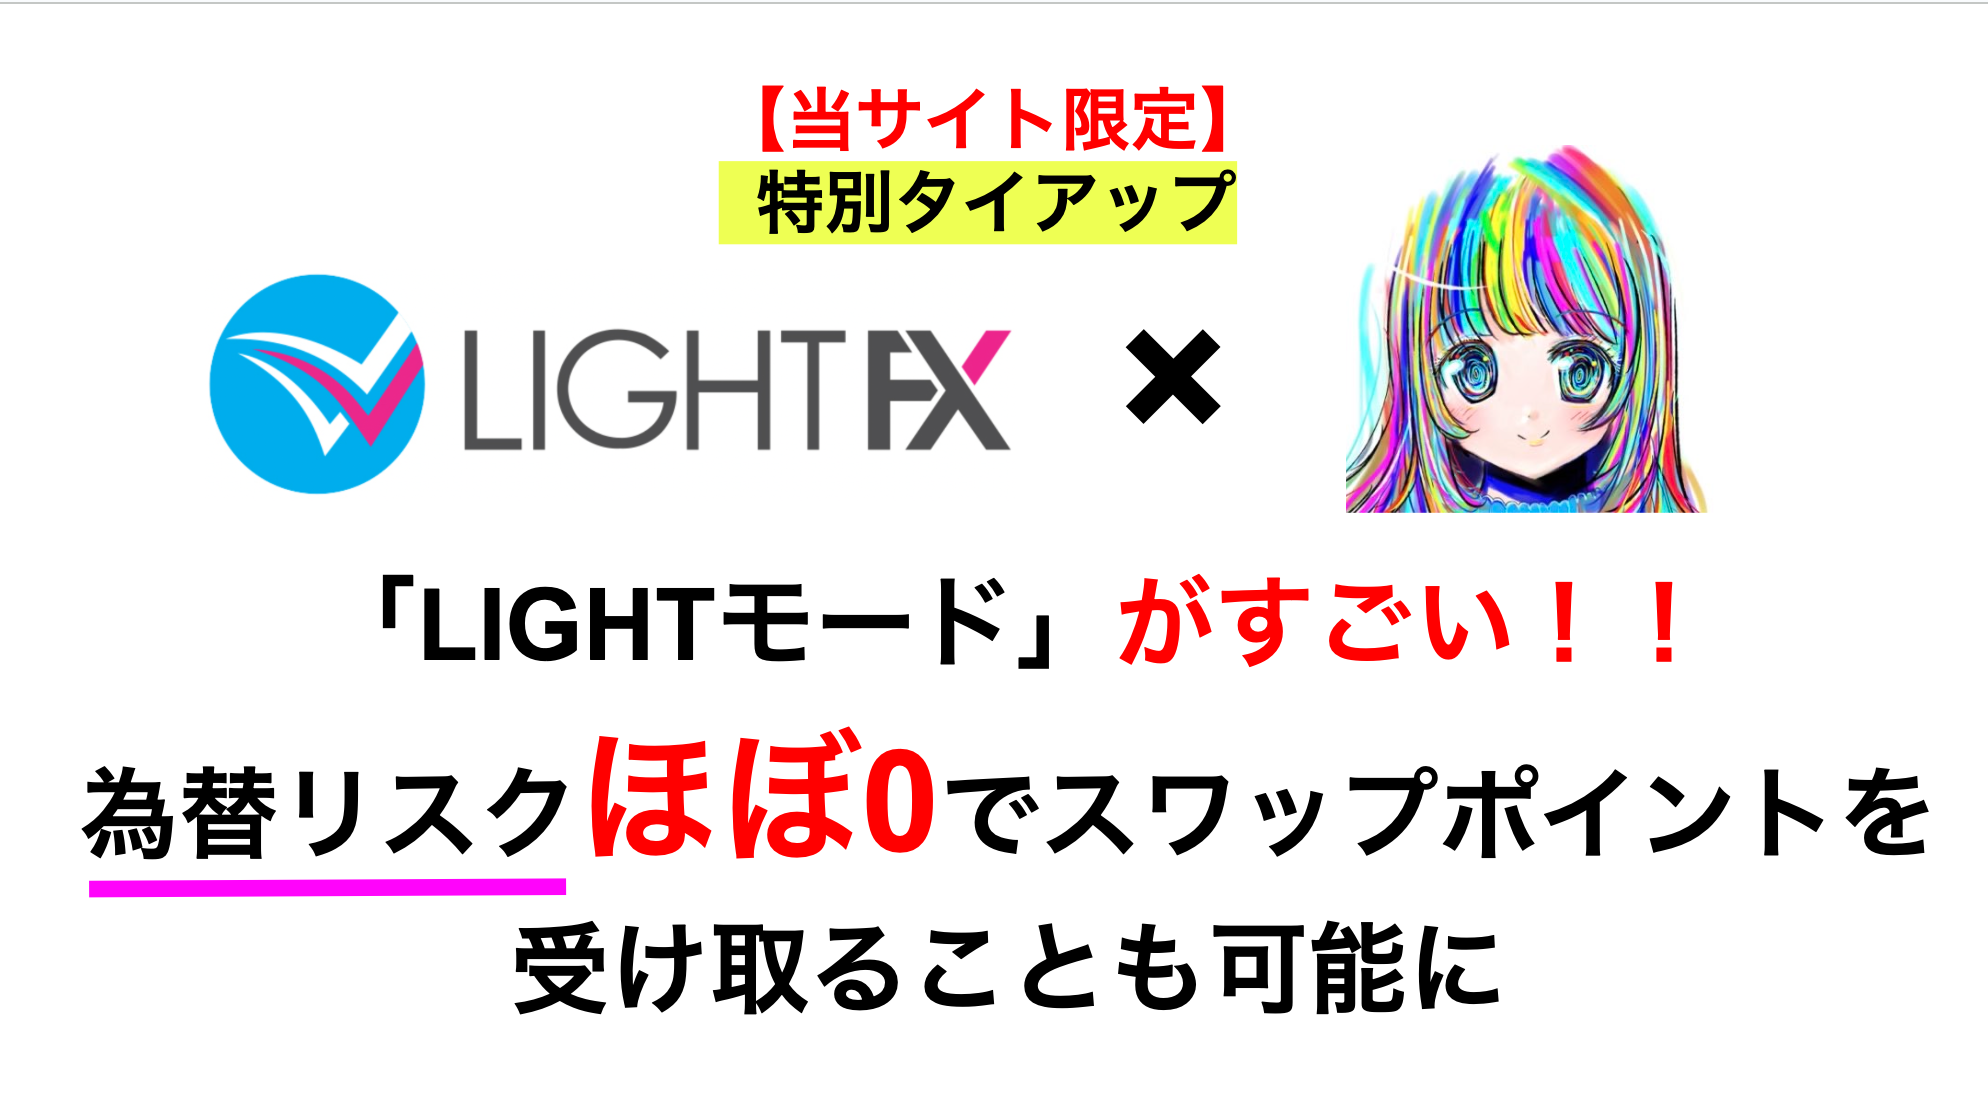 LIGHT FX LIGHTモード